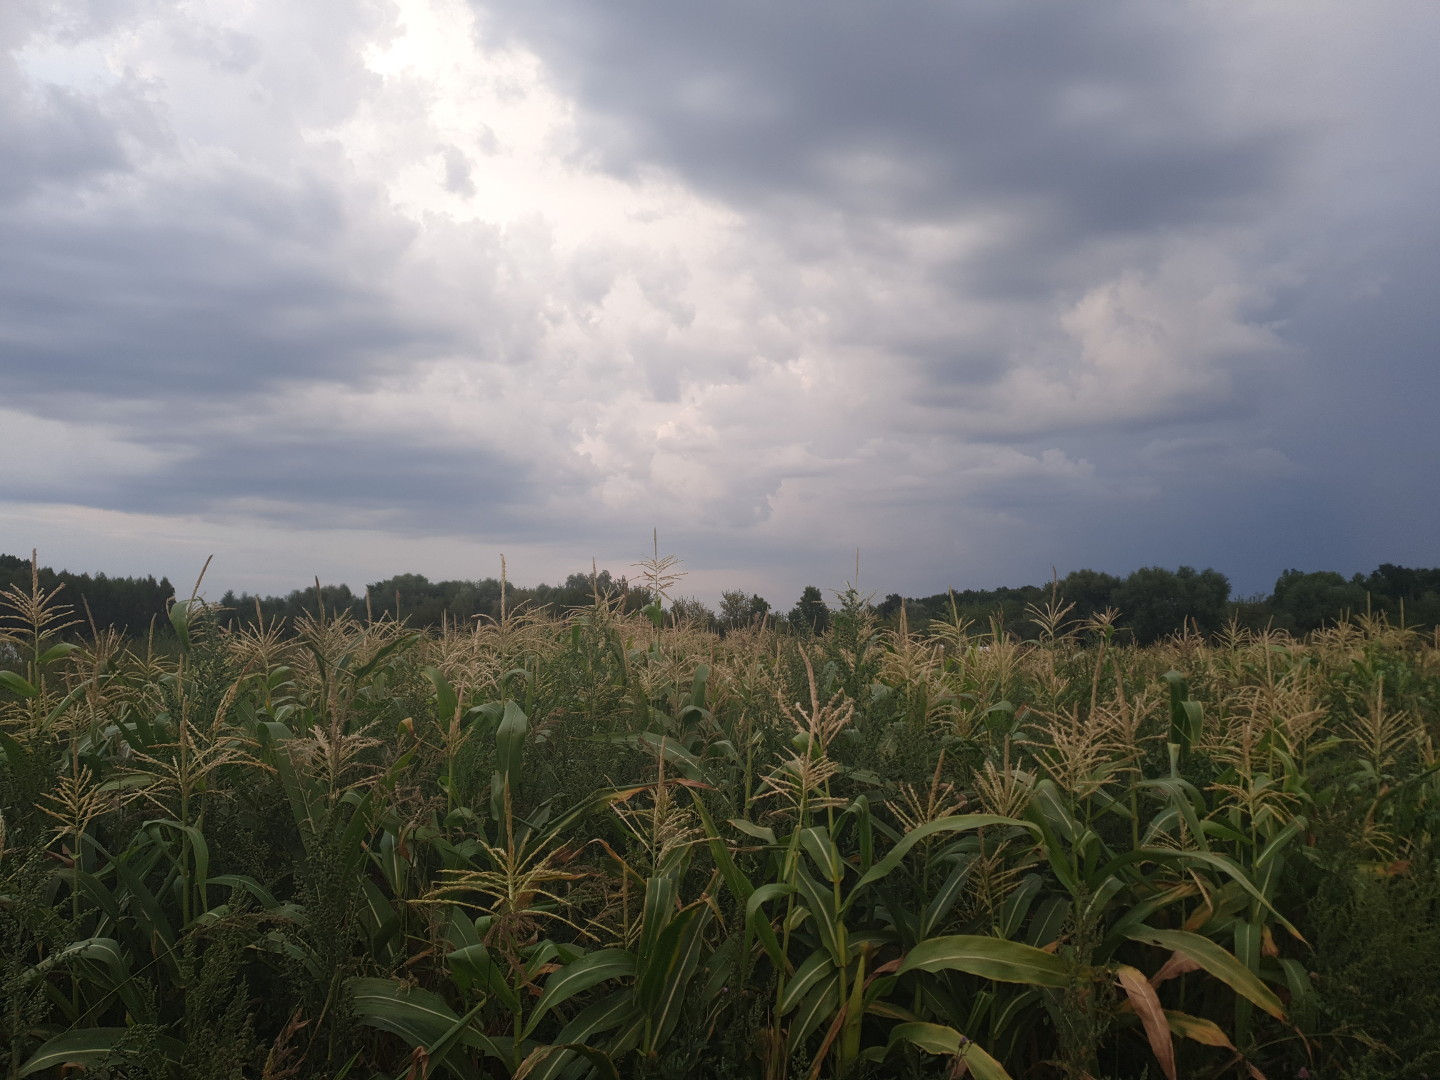 Dojrzała kukurydza na polu, a nad nią pochmurne niebo